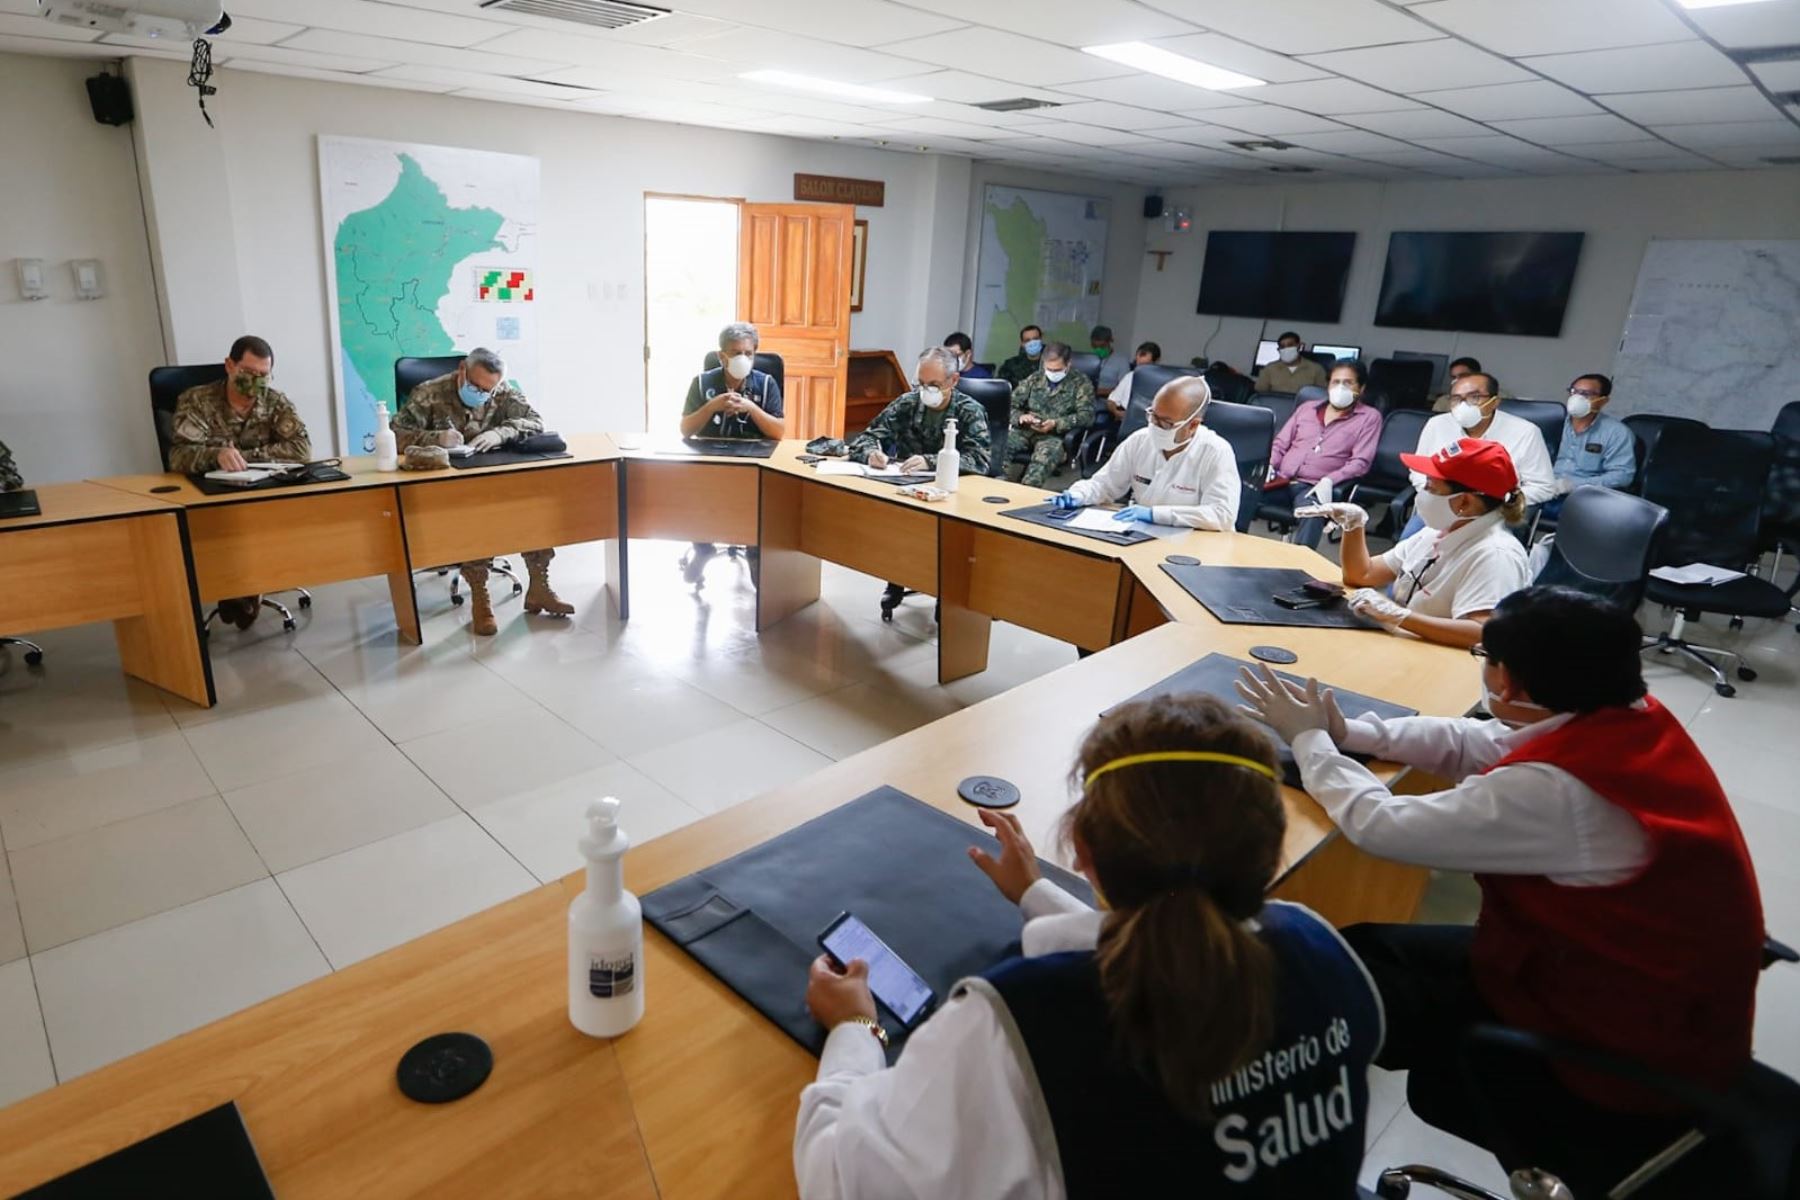 Peru Health Min visits Loreto region to monitor COVID-19 response measures